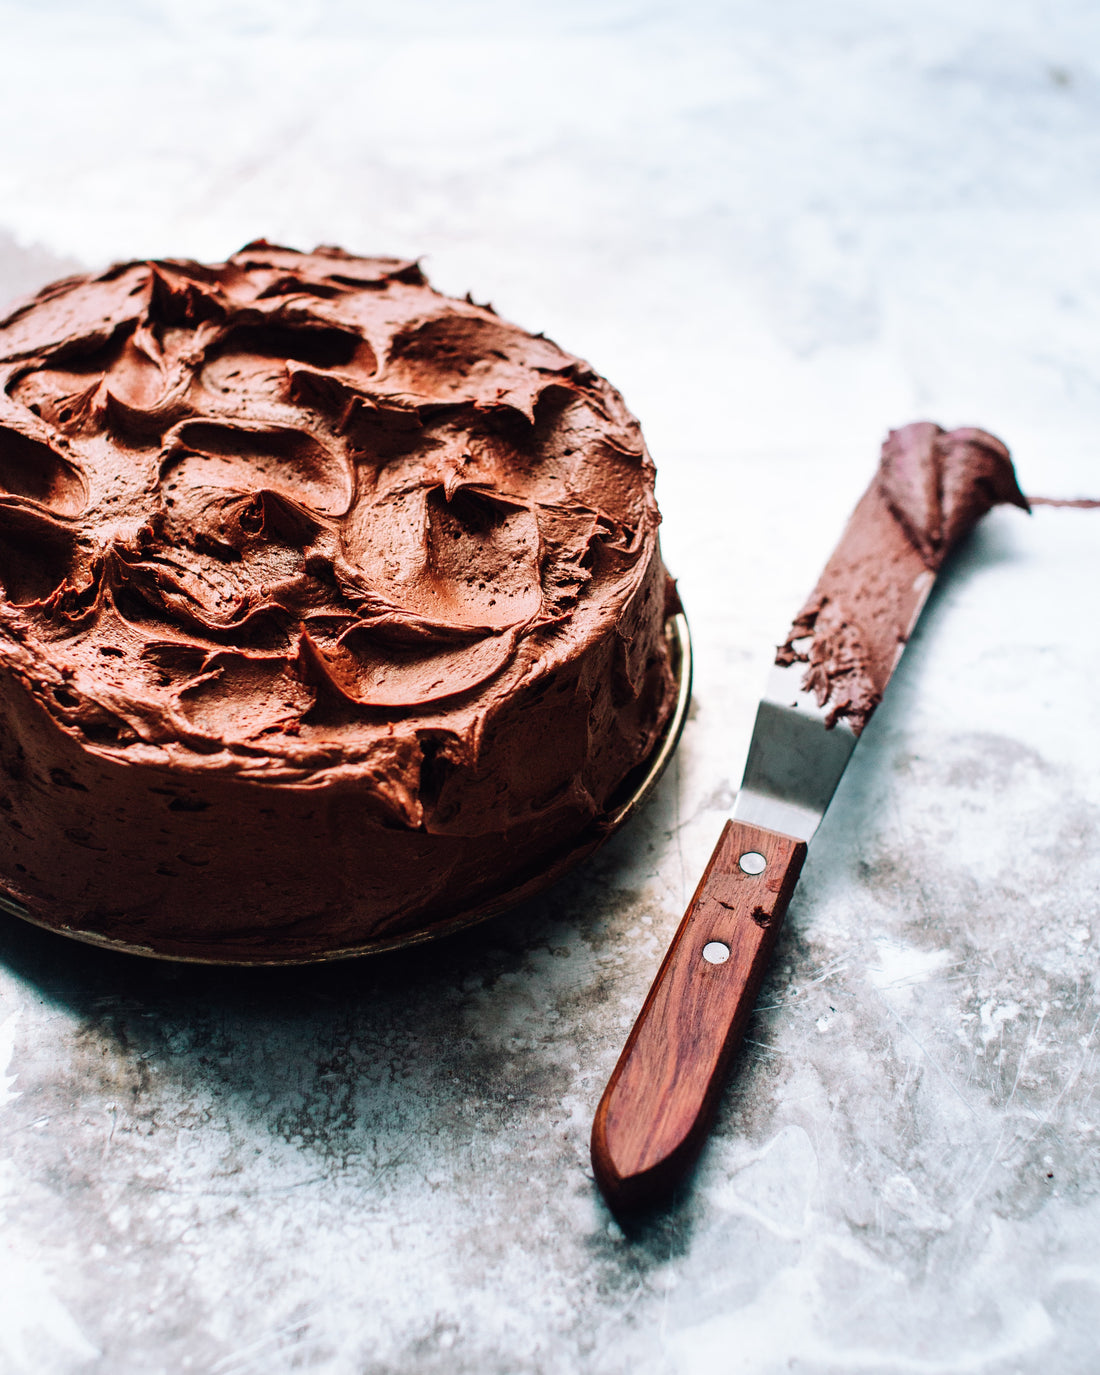 How to Make a Vegan Chocolate Cake